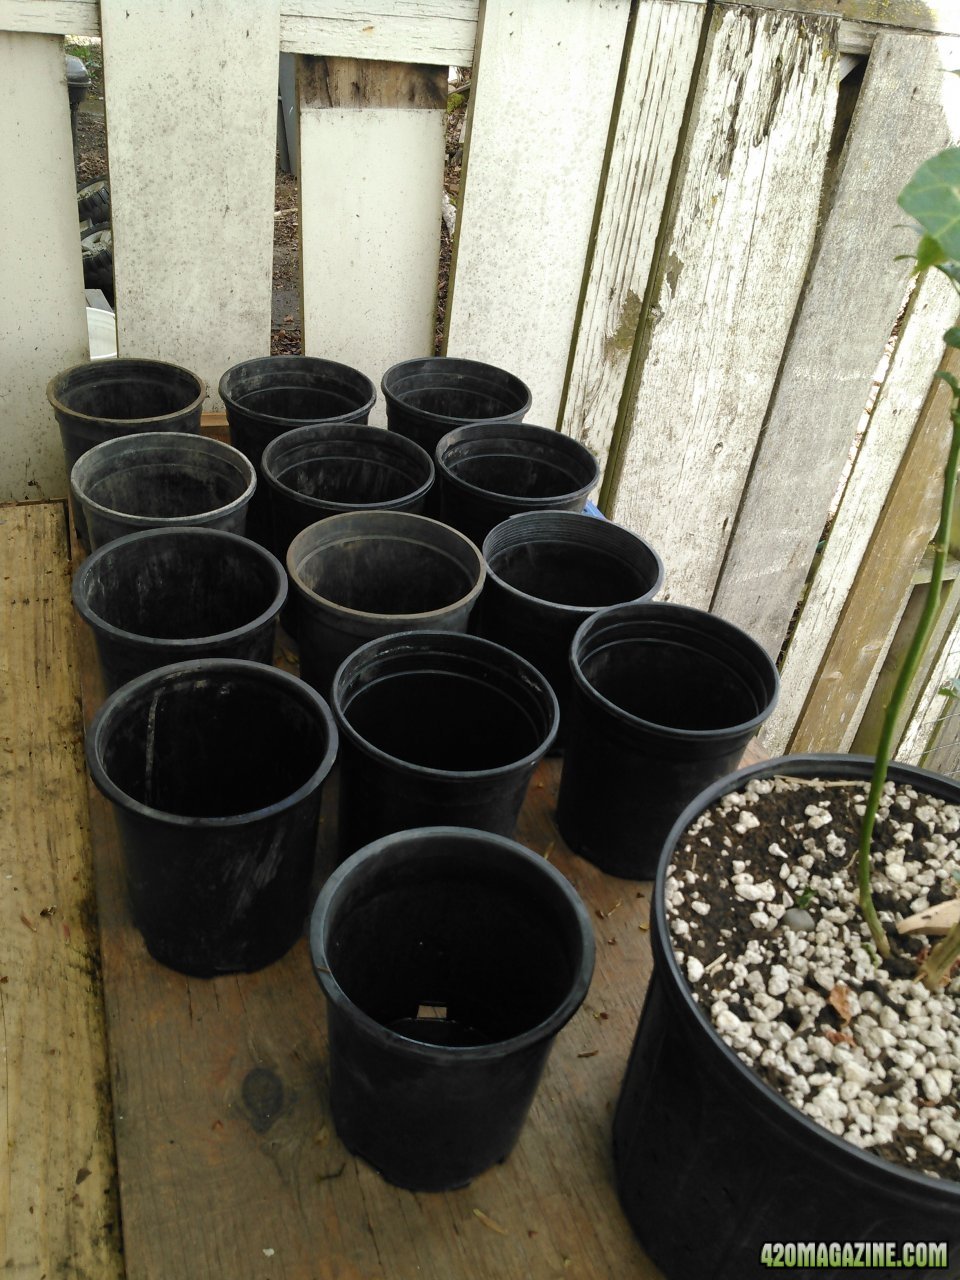 2 Litre/ half gallon pots for UDs